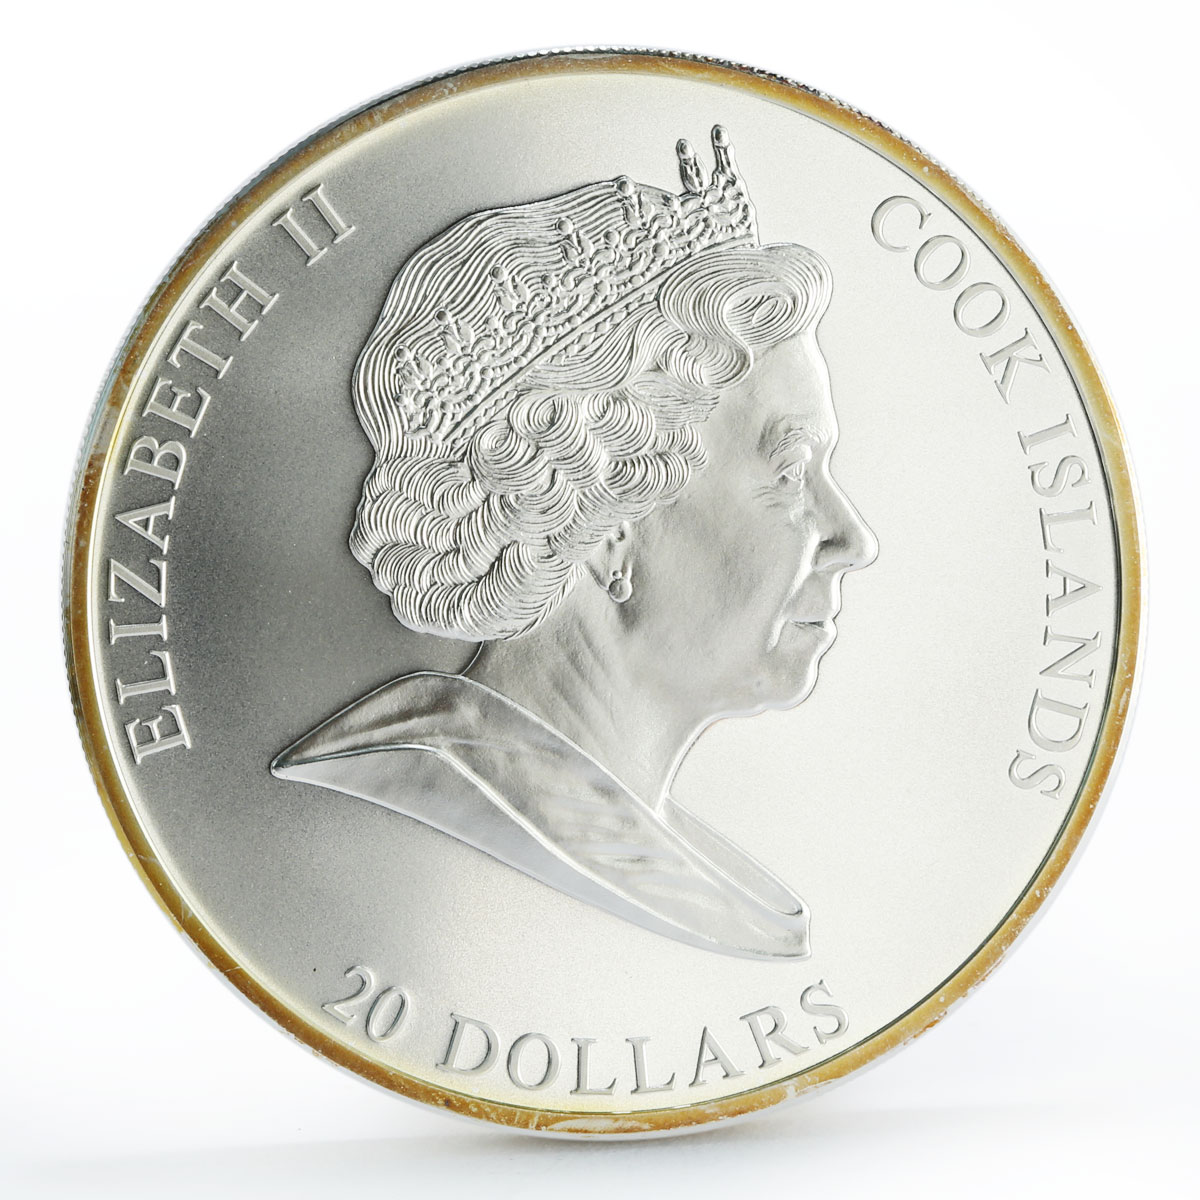 Cook Islands 20 dollars Michelangelo Art Creation of Adam silver coin 2008